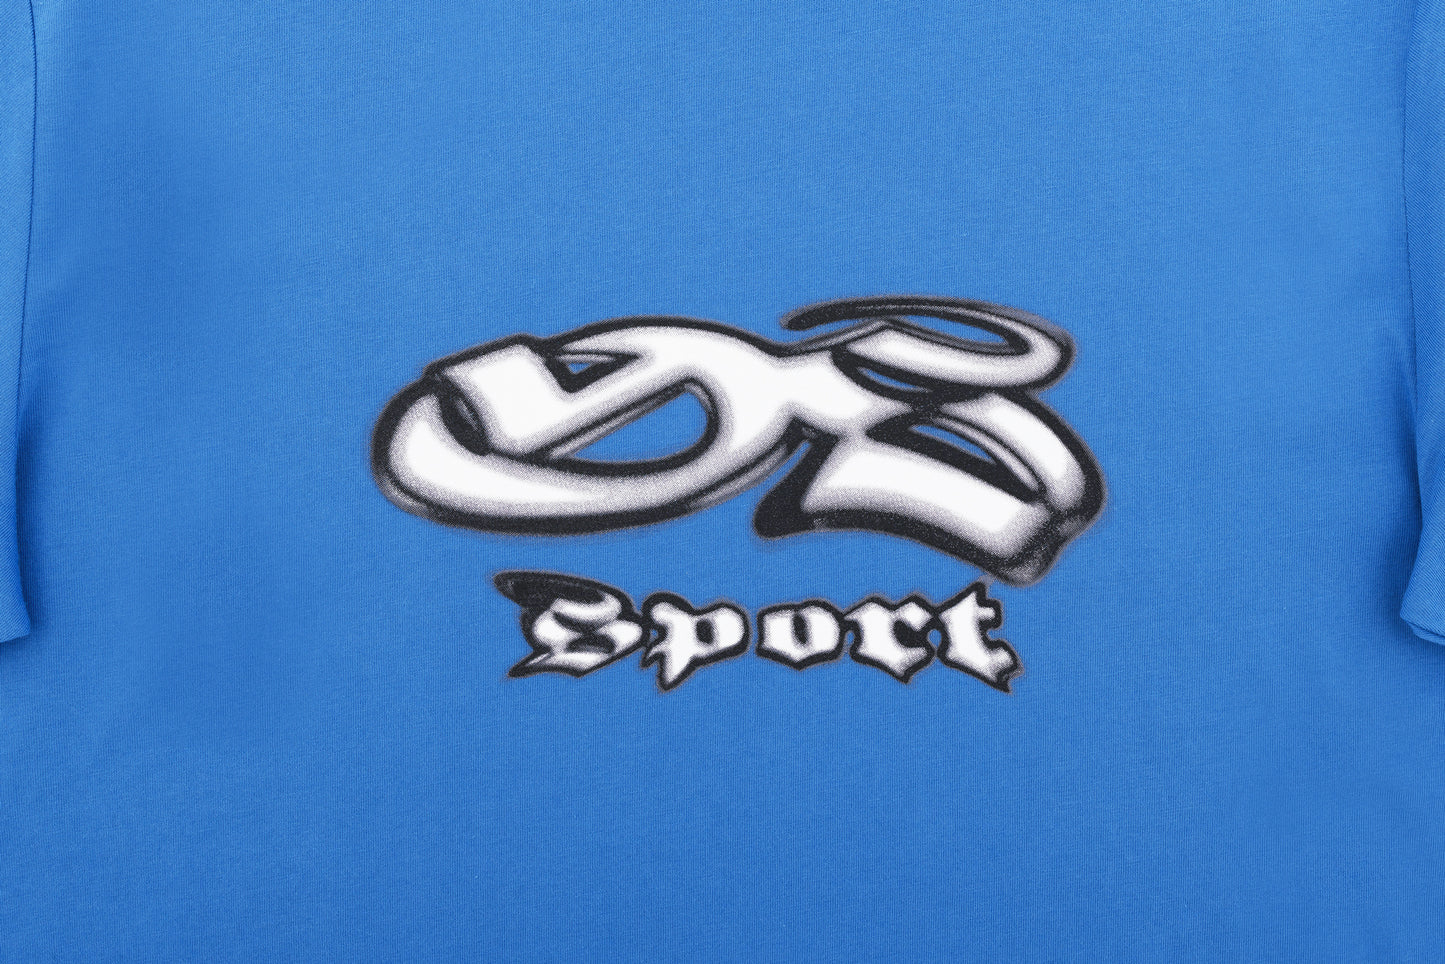 YS Sport Spray T-Shirt (Blue)